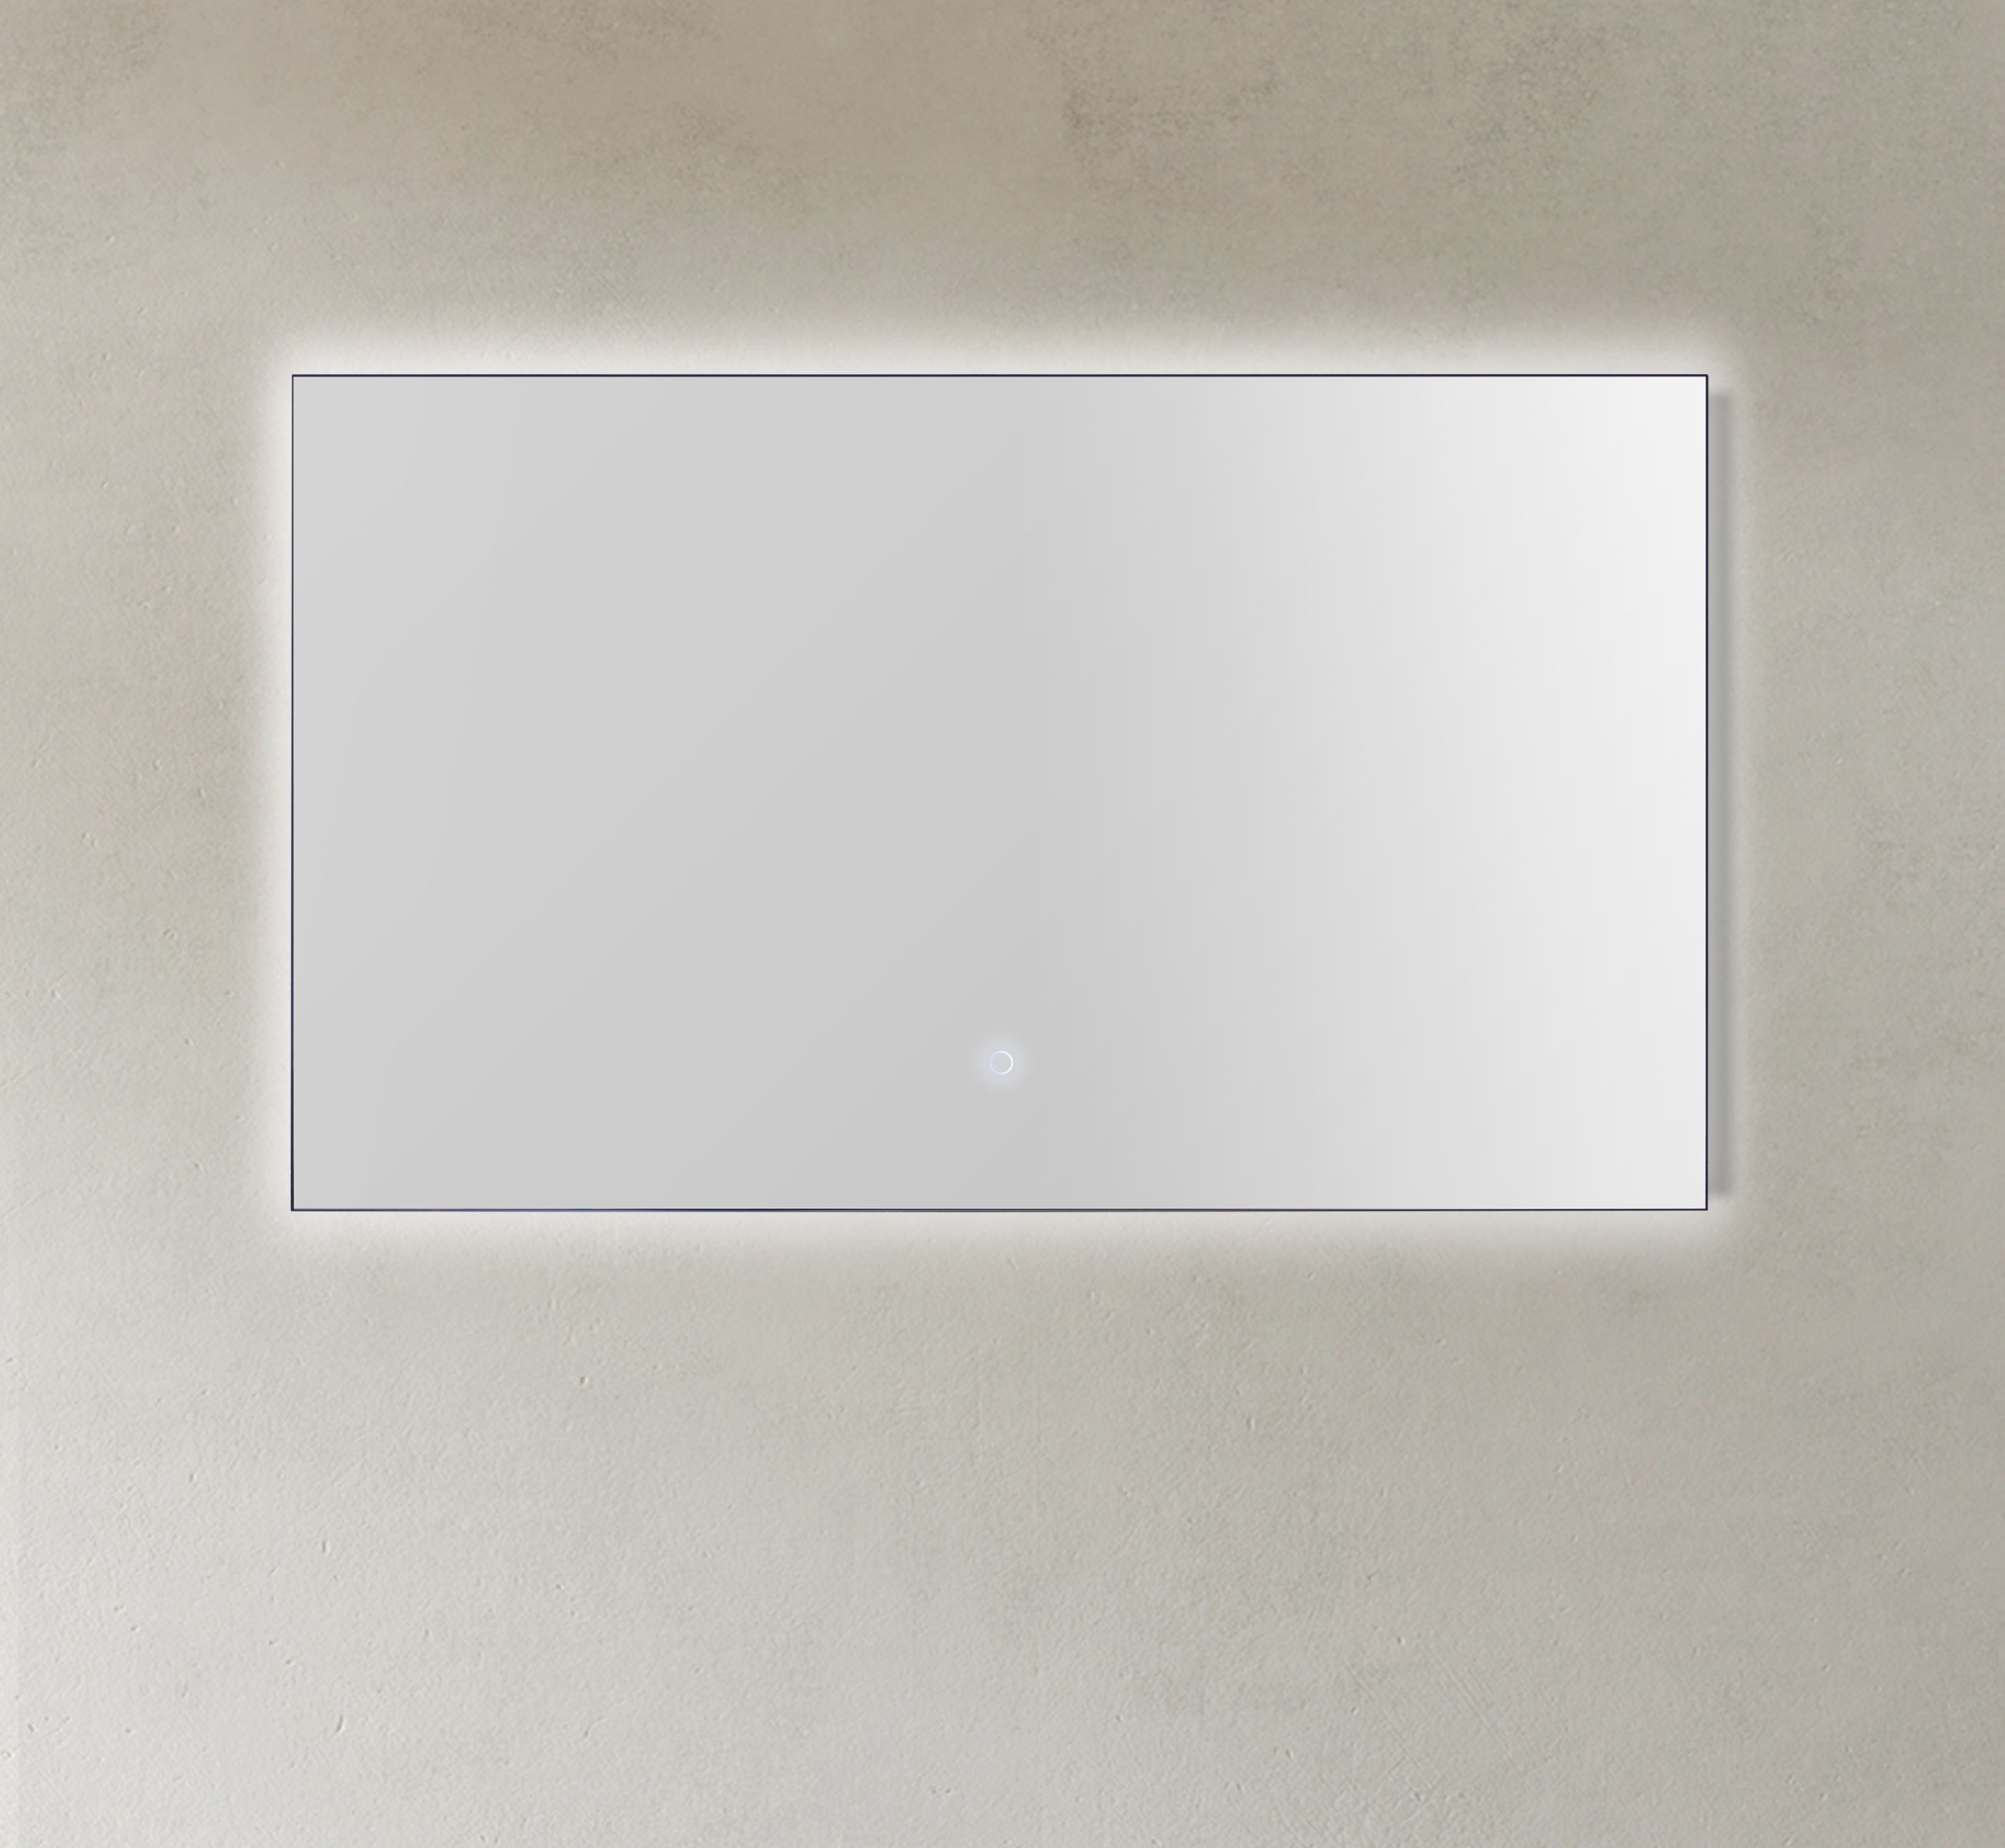 47" Black Framed LED Bathroom Vanity Mirror